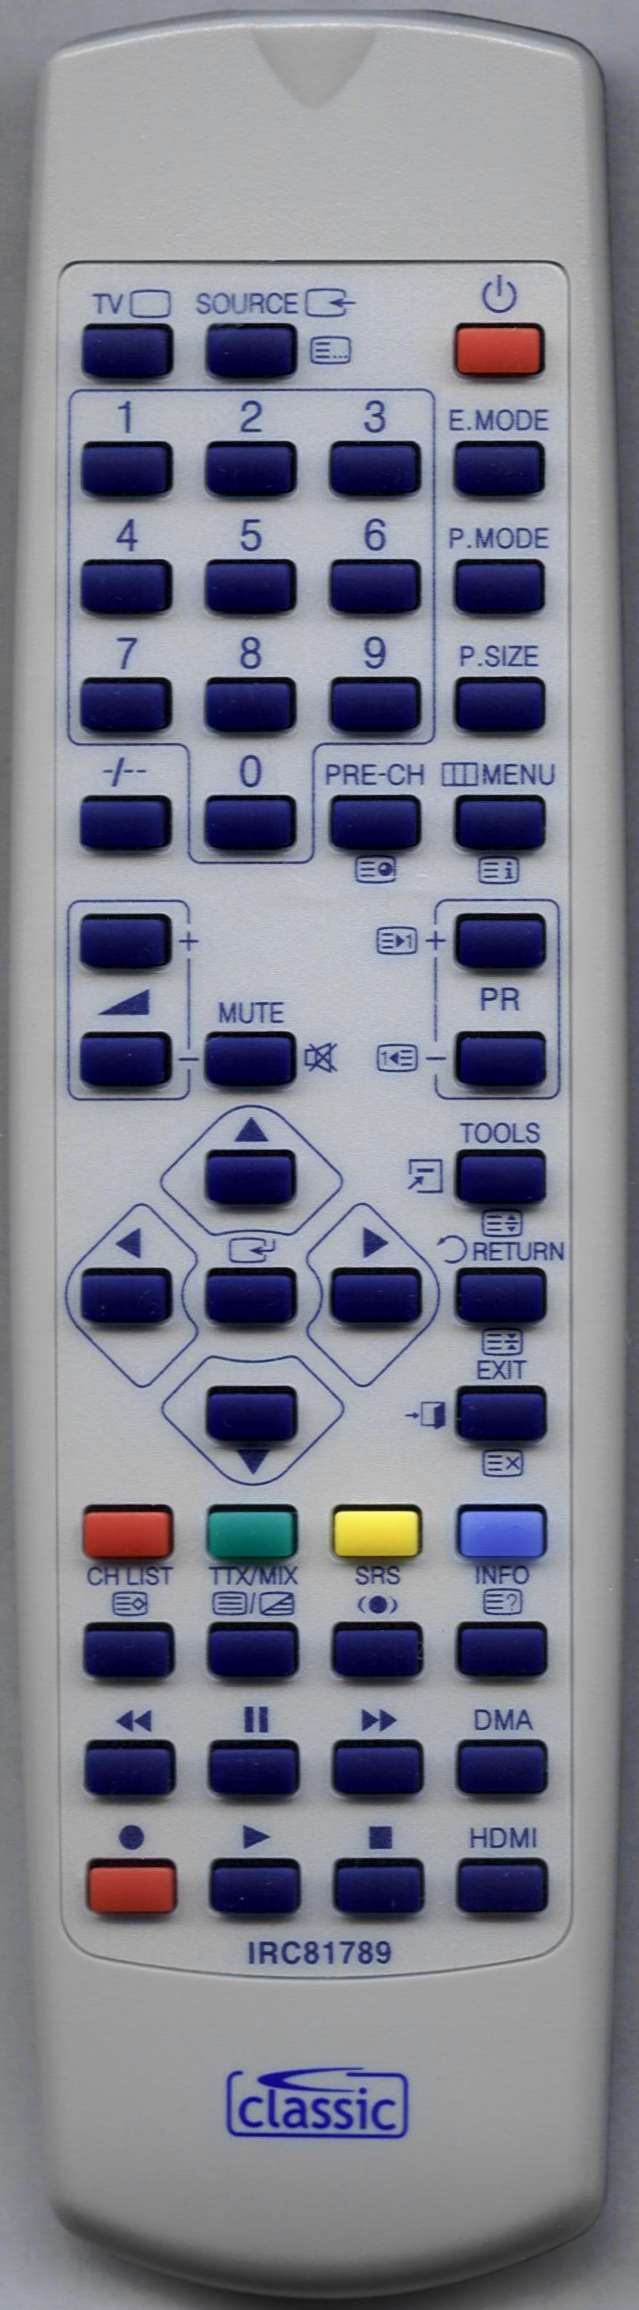 SAMSUNG PS-50 A451P1 Remote Control Alternative